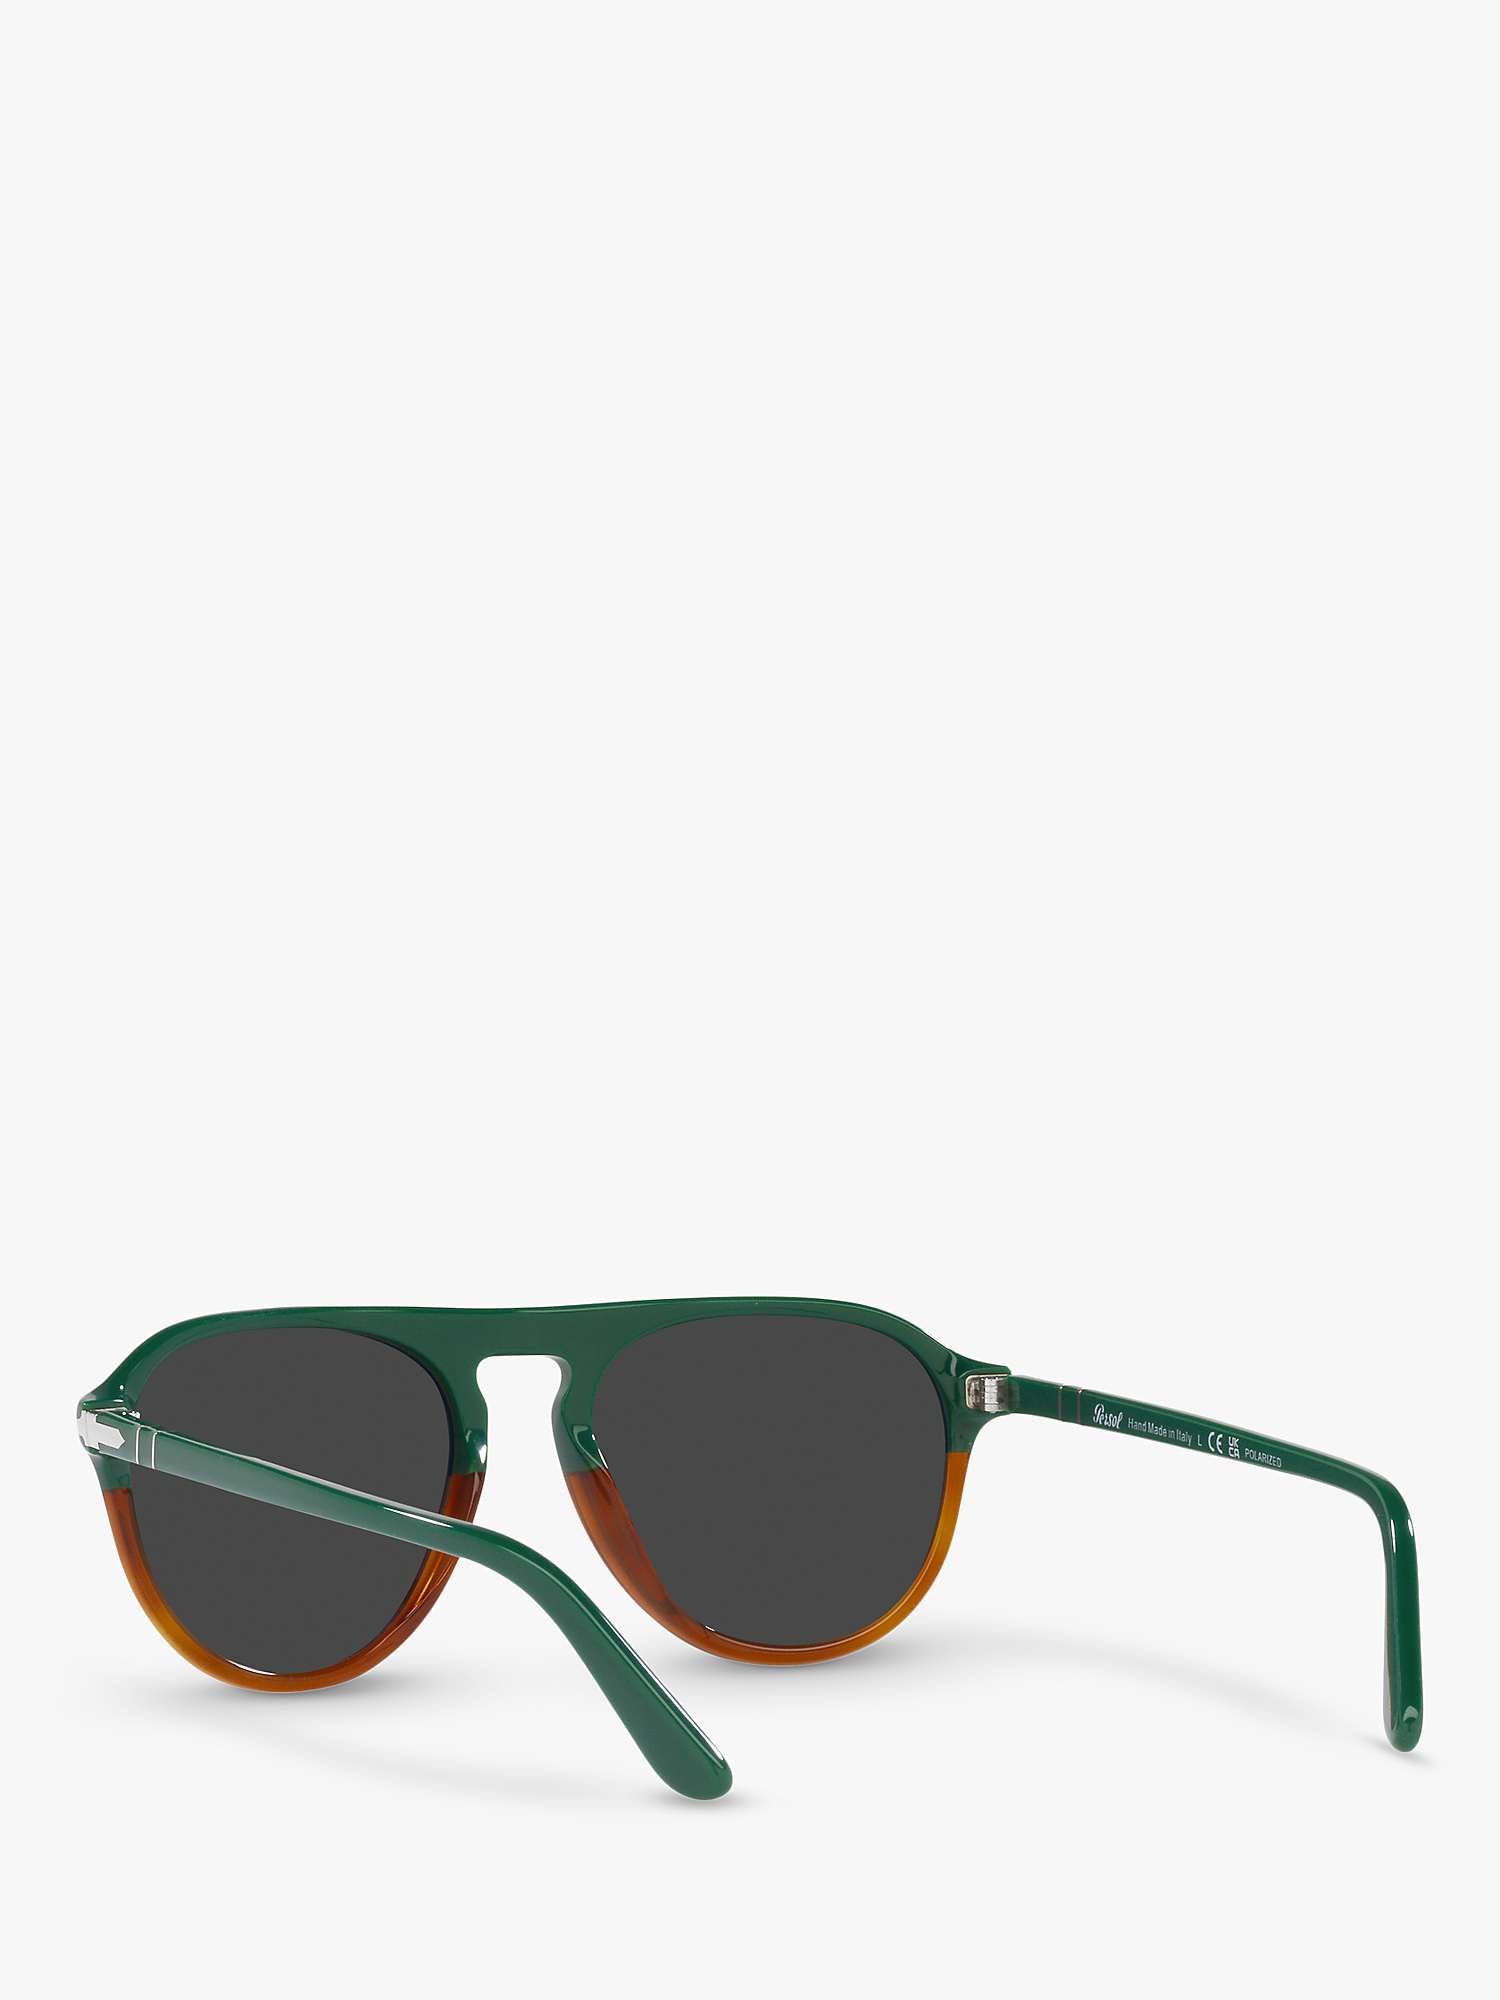 Buy Persol PO3302S Unisex Aviator Sunglasses, Green/Havana Chiara Online at johnlewis.com